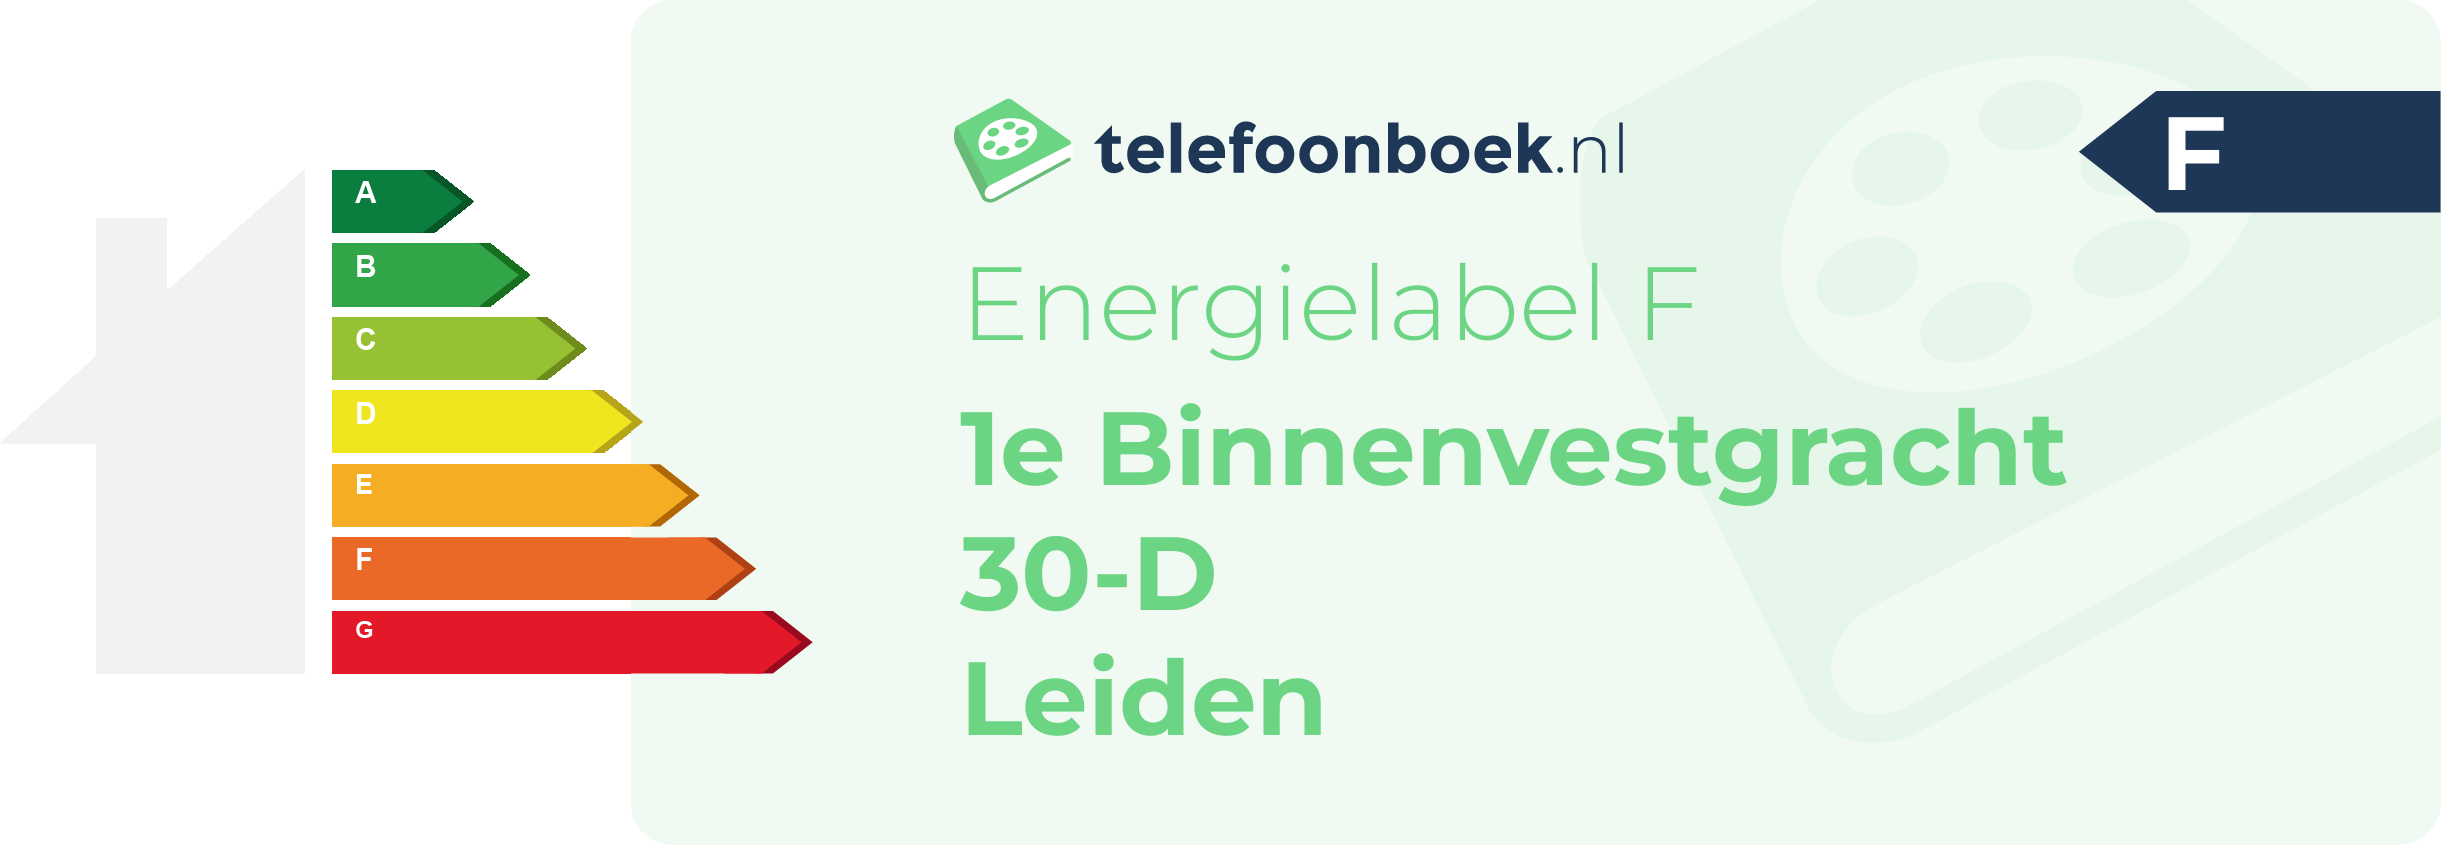 Energielabel 1e Binnenvestgracht 30-D Leiden